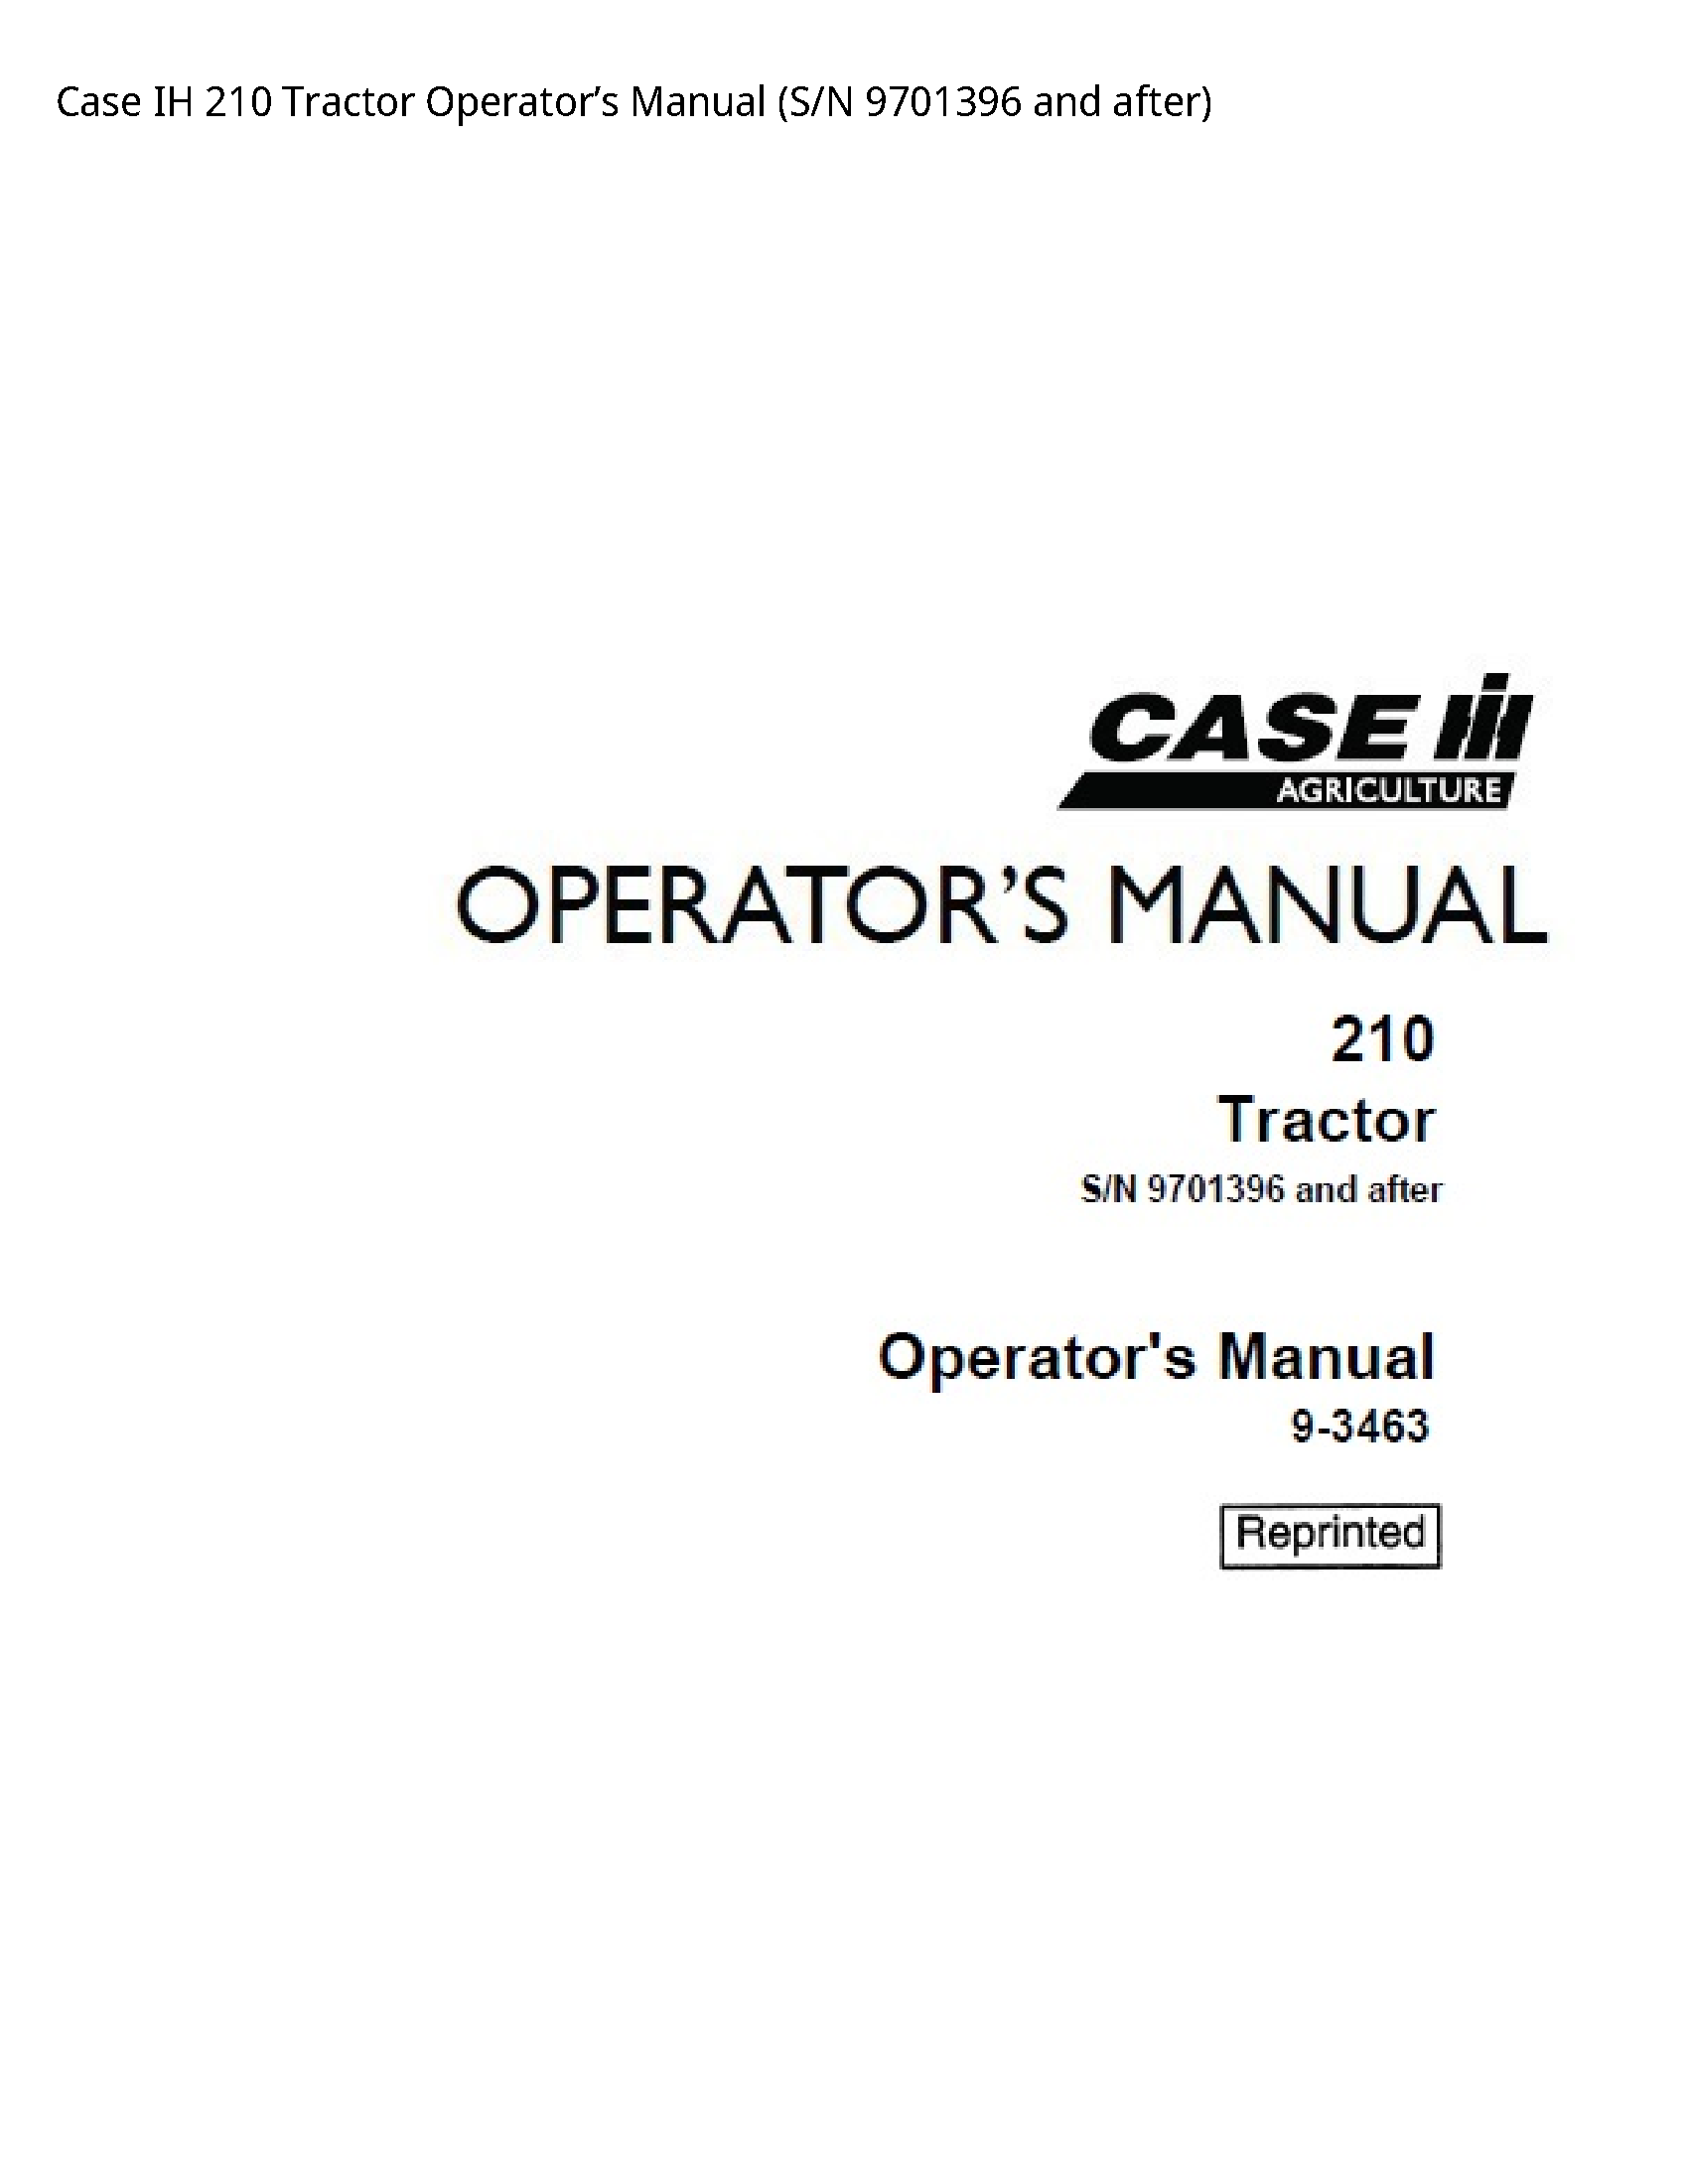 Case/Case IH 210 IH Tractor Operator’s manual